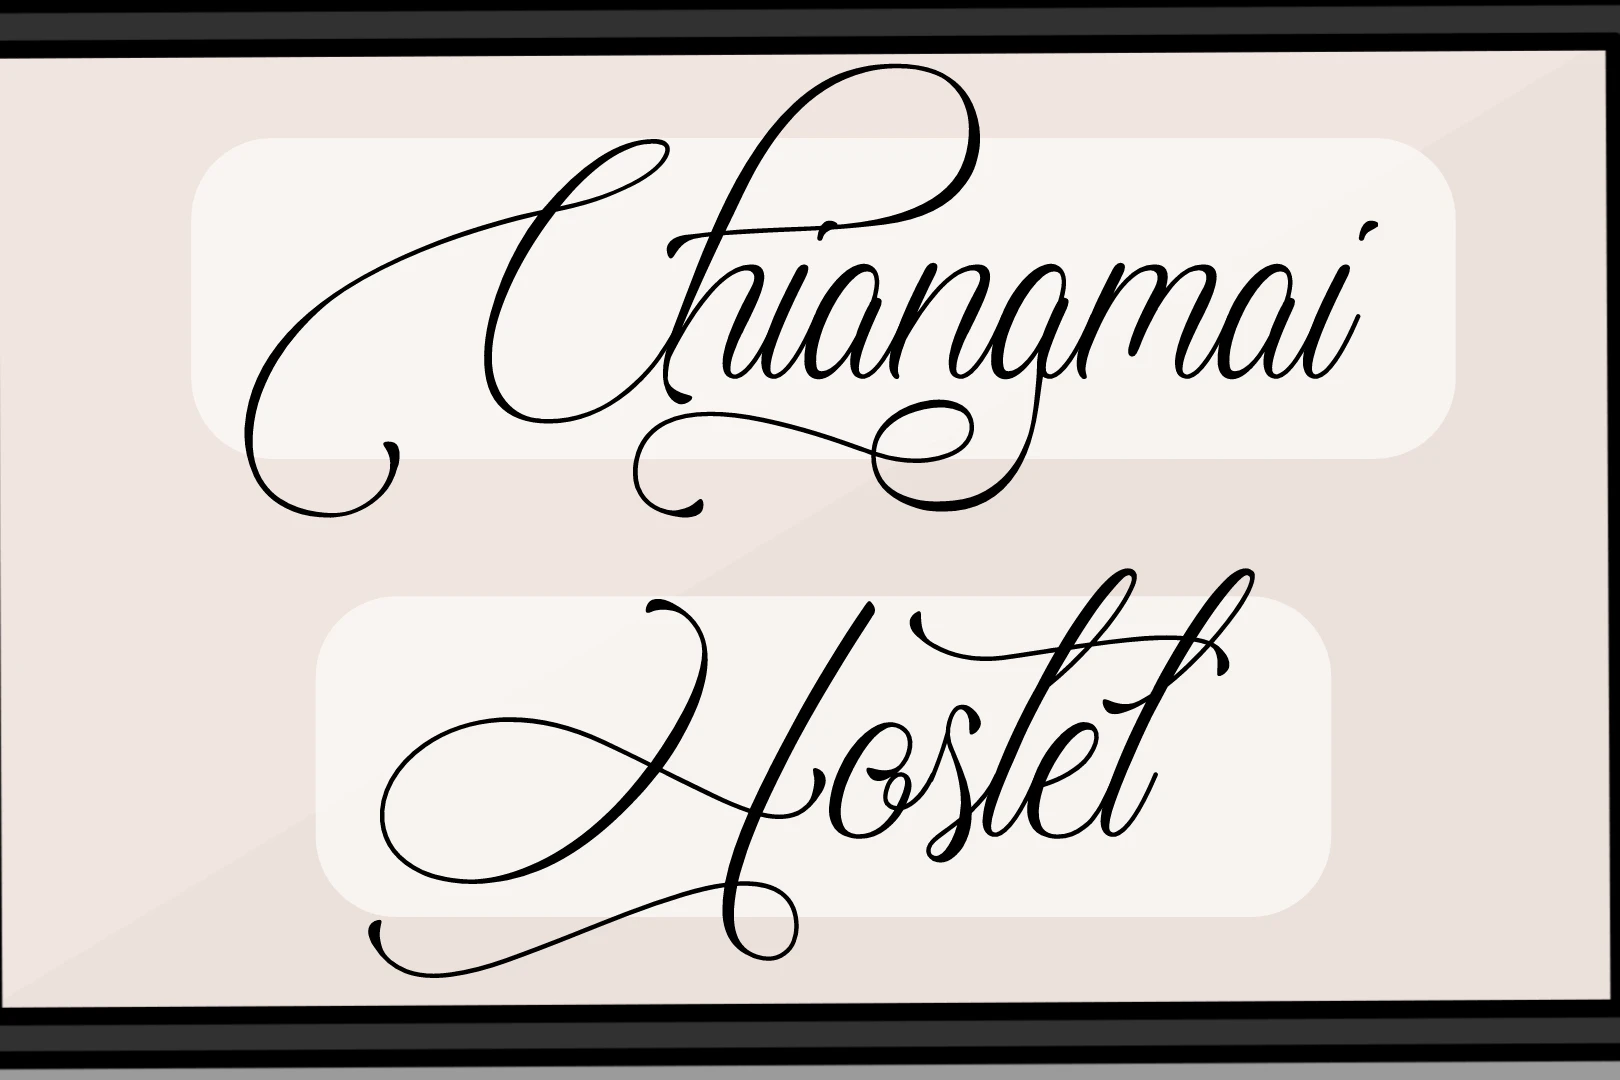 Chiangmai Hostel Font Feature Image